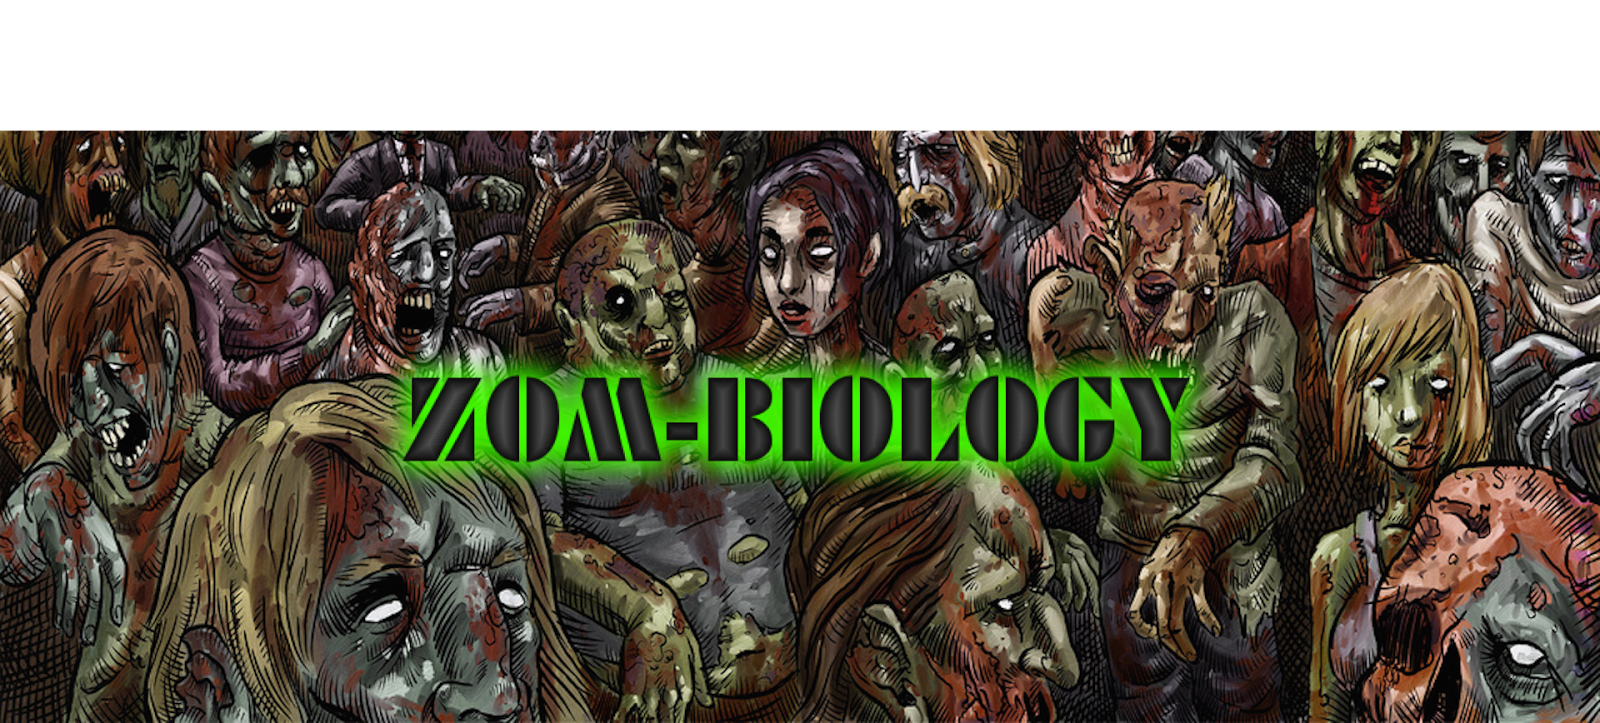 Zom-biology